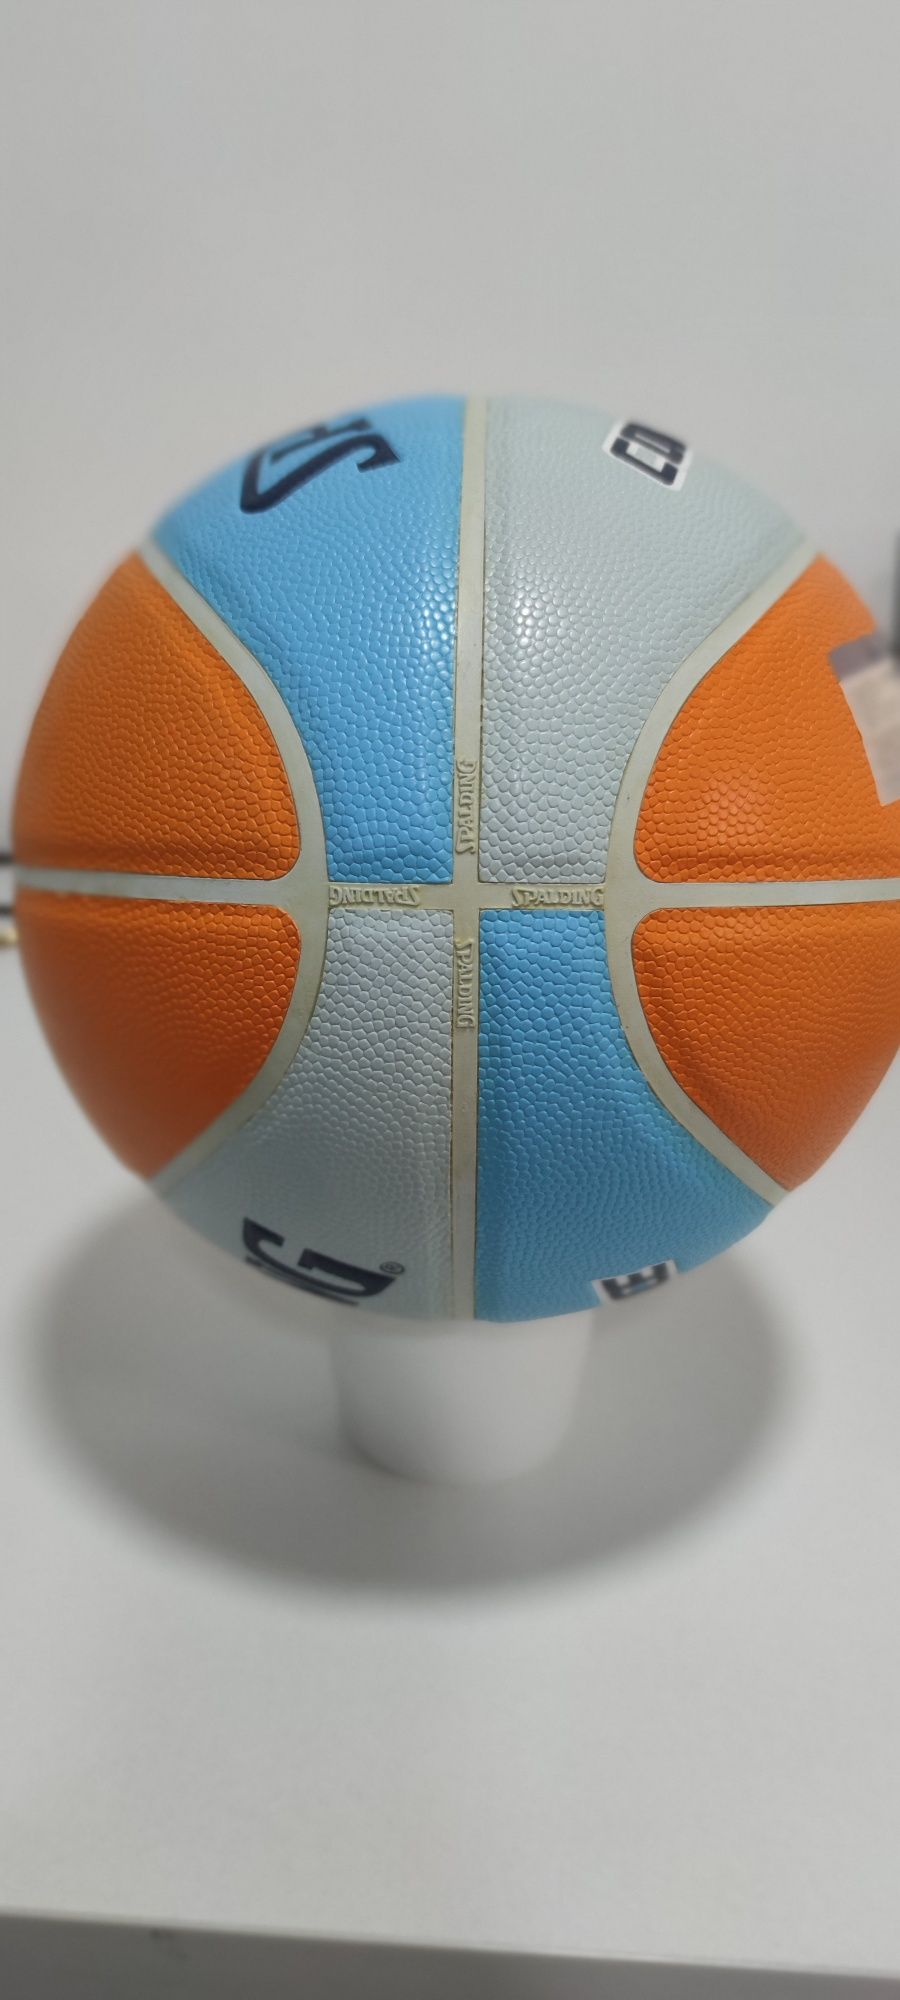 Мяч баскетбольный Spalding